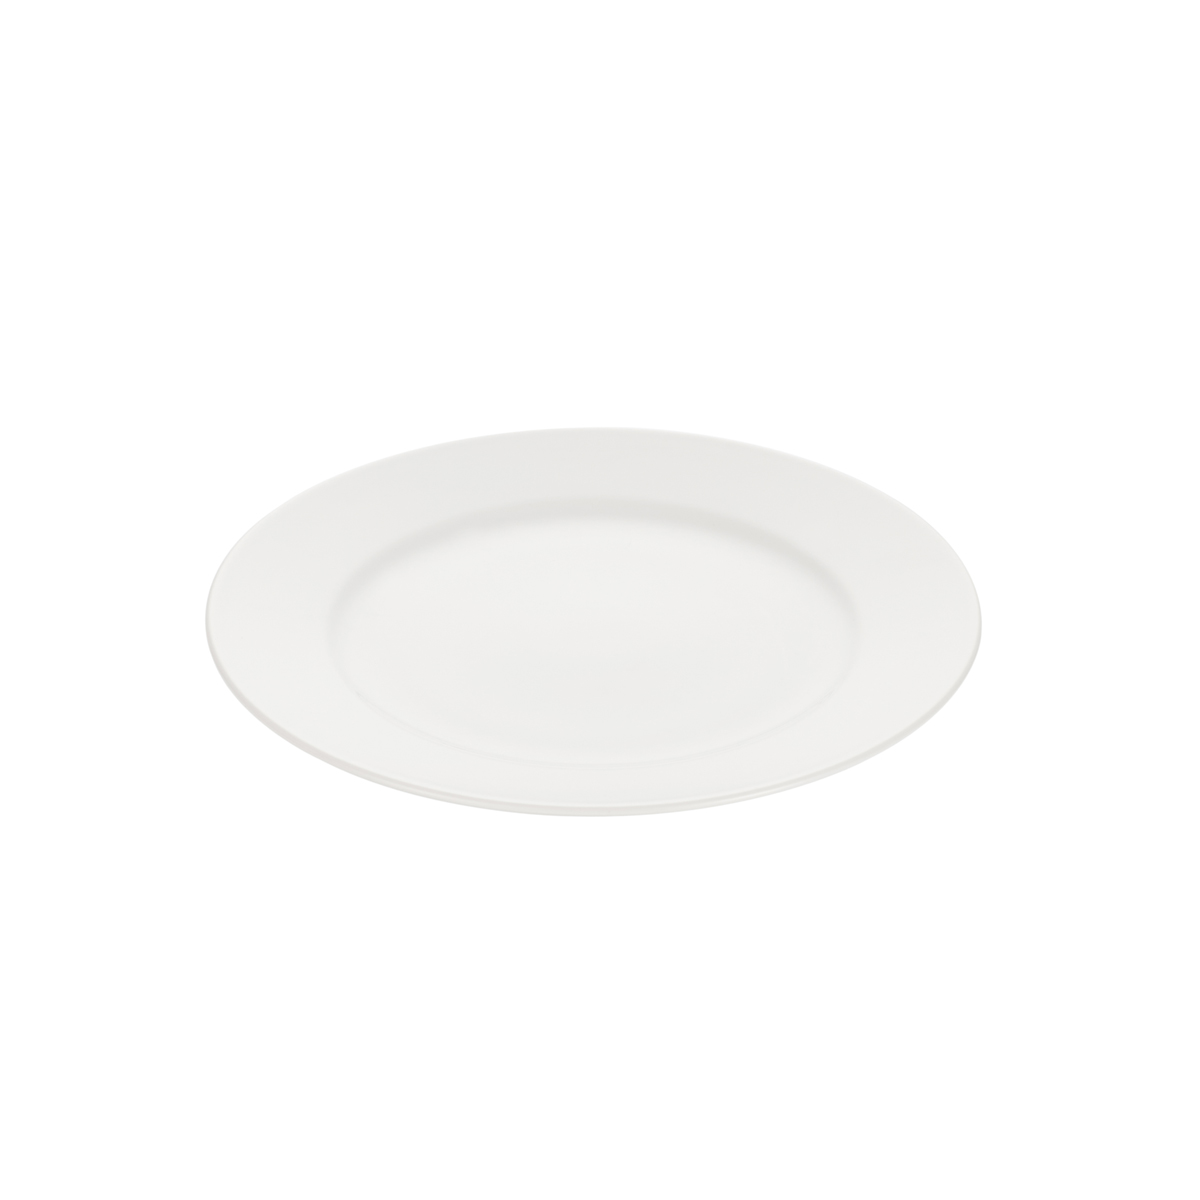 Плоская тарелка Gipfel Classique 50905 25 см плоская тарелка gipfel classique 50905 25 см